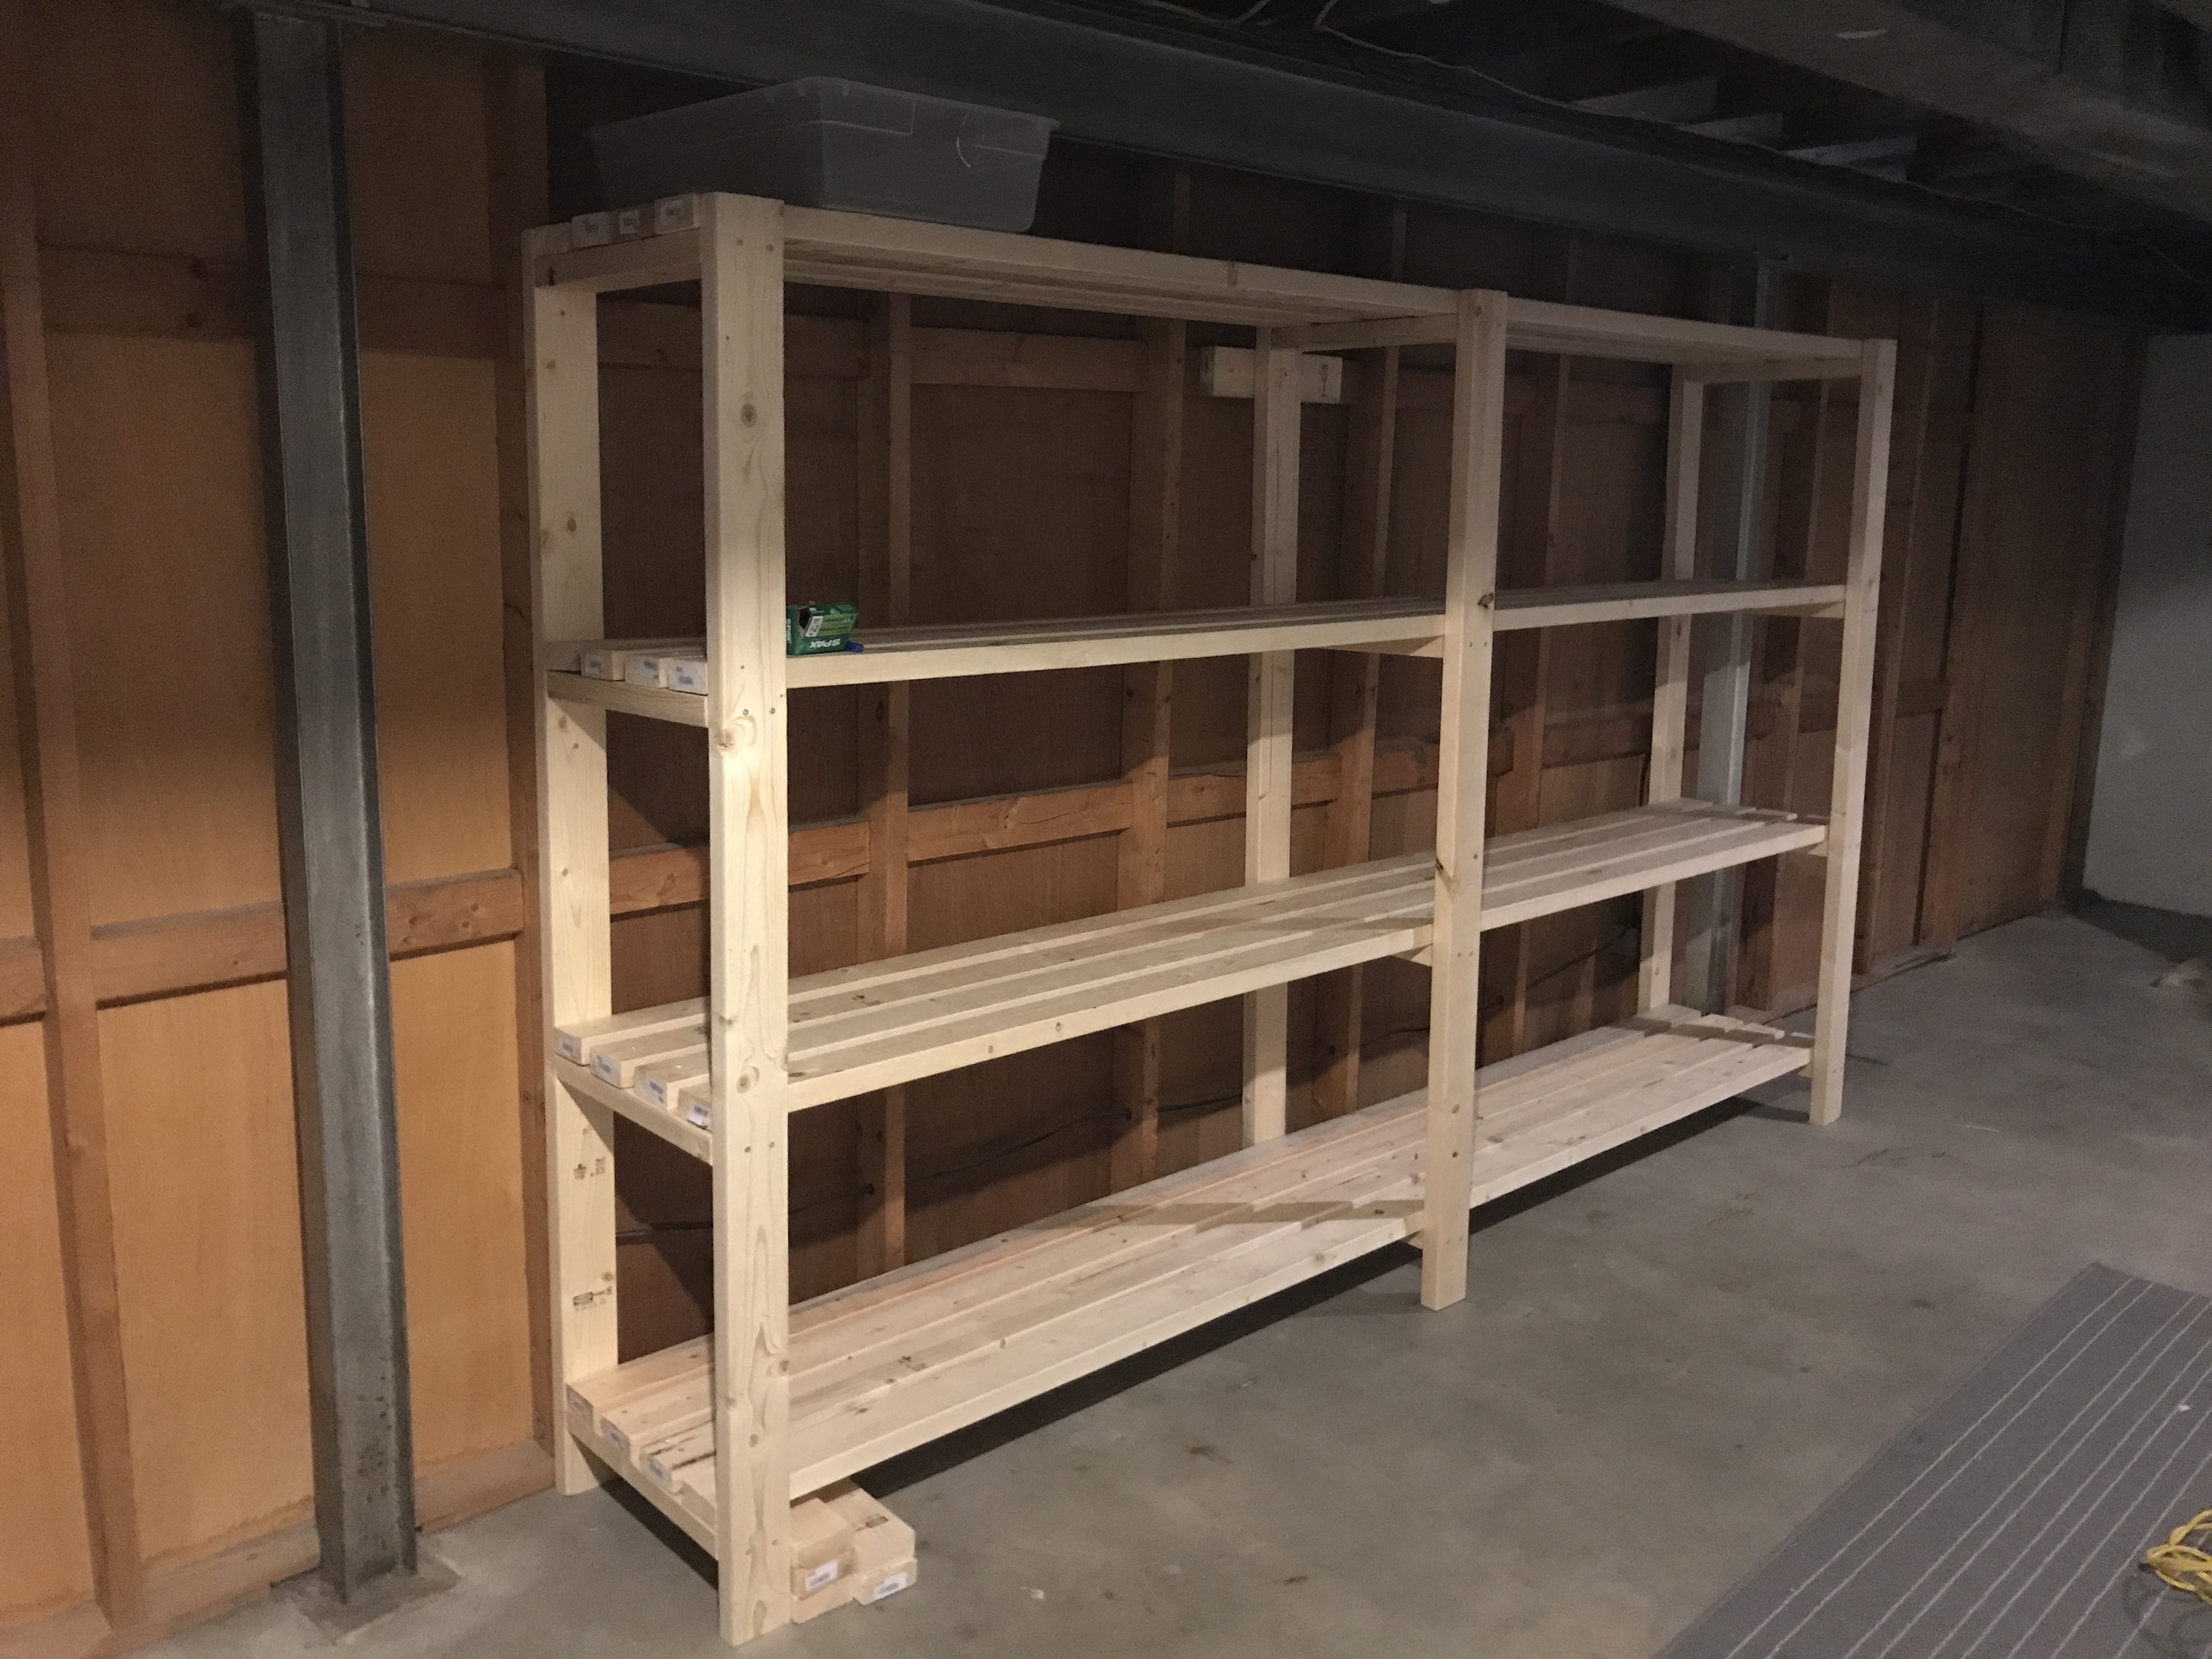 Quick Basement Shelves Ana White, How To Build Basement Shelves From 2 215 4 Serv